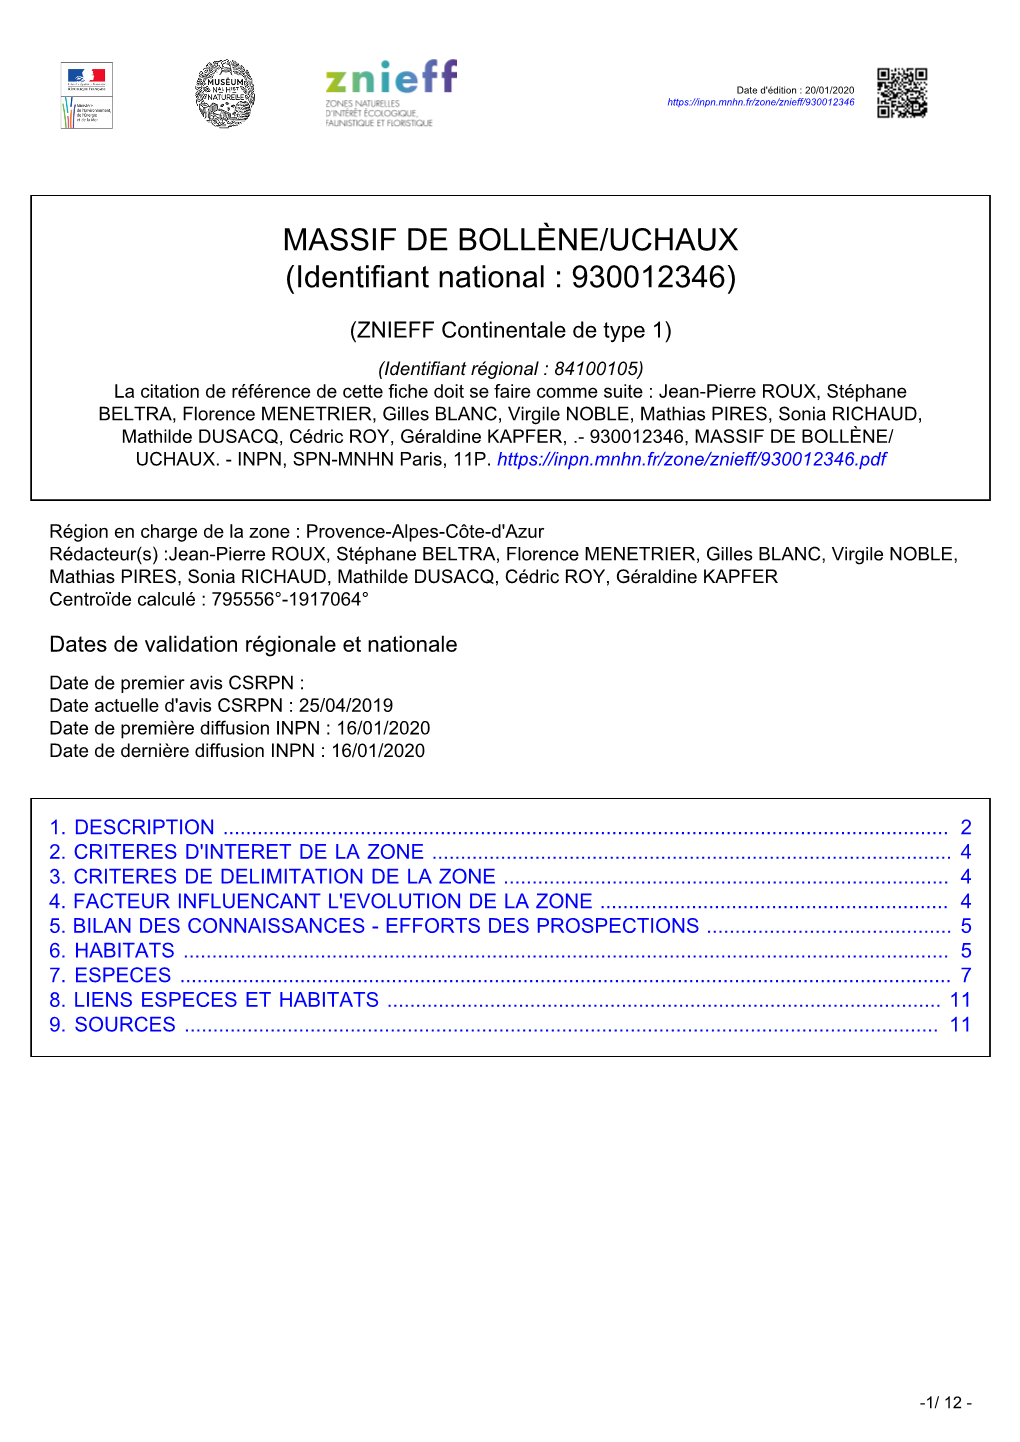 MASSIF DE BOLLÈNE/UCHAUX (Identifiant National : 930012346)